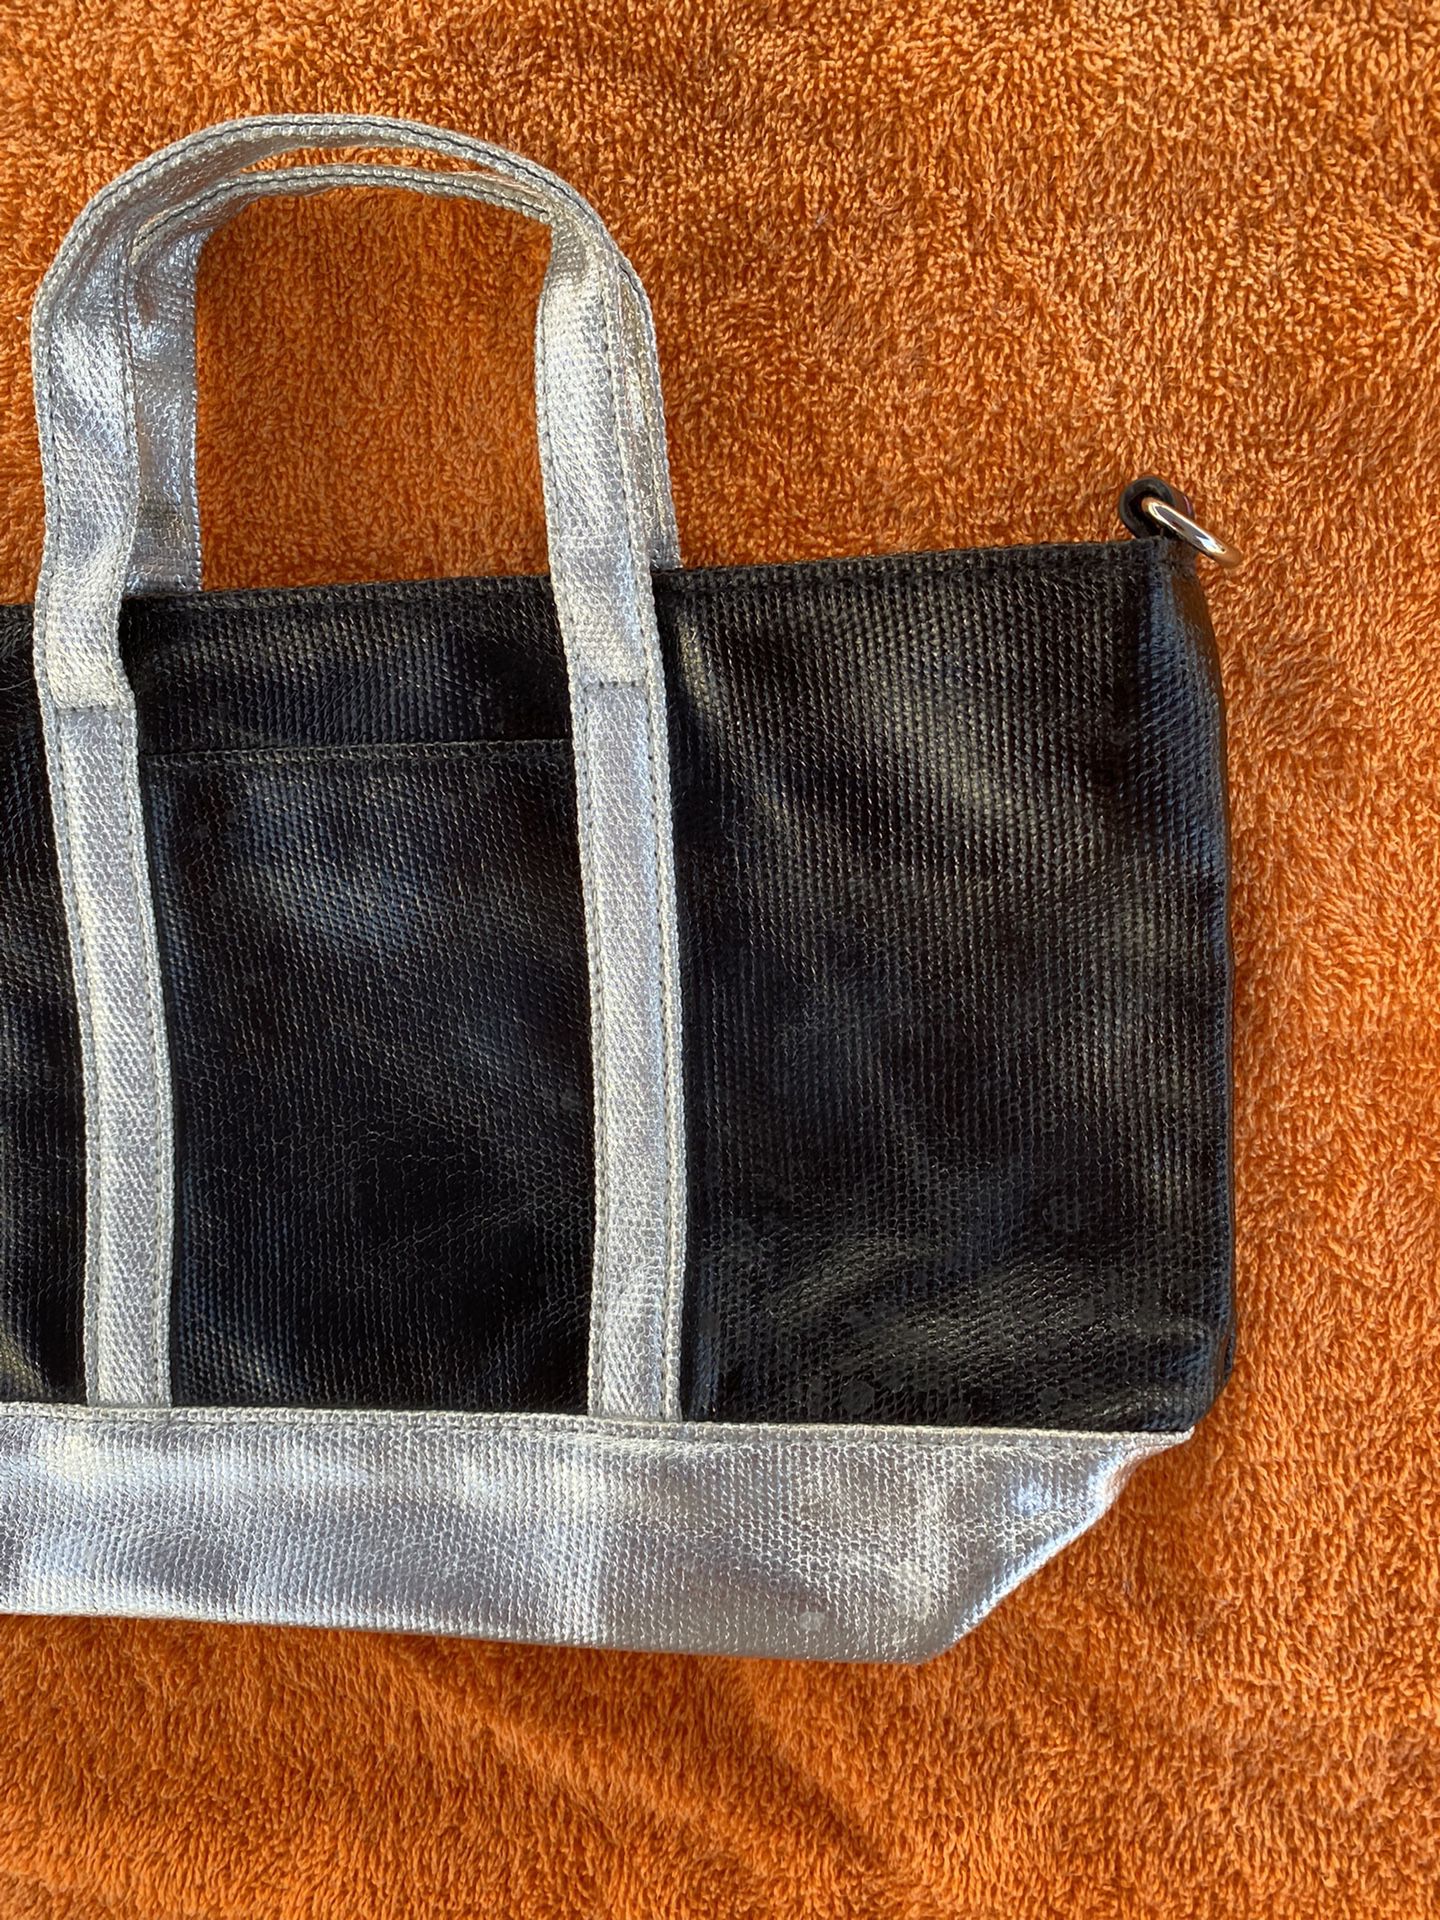 Victoria’s Secret Black Gray Womens Small Clutch Bag 